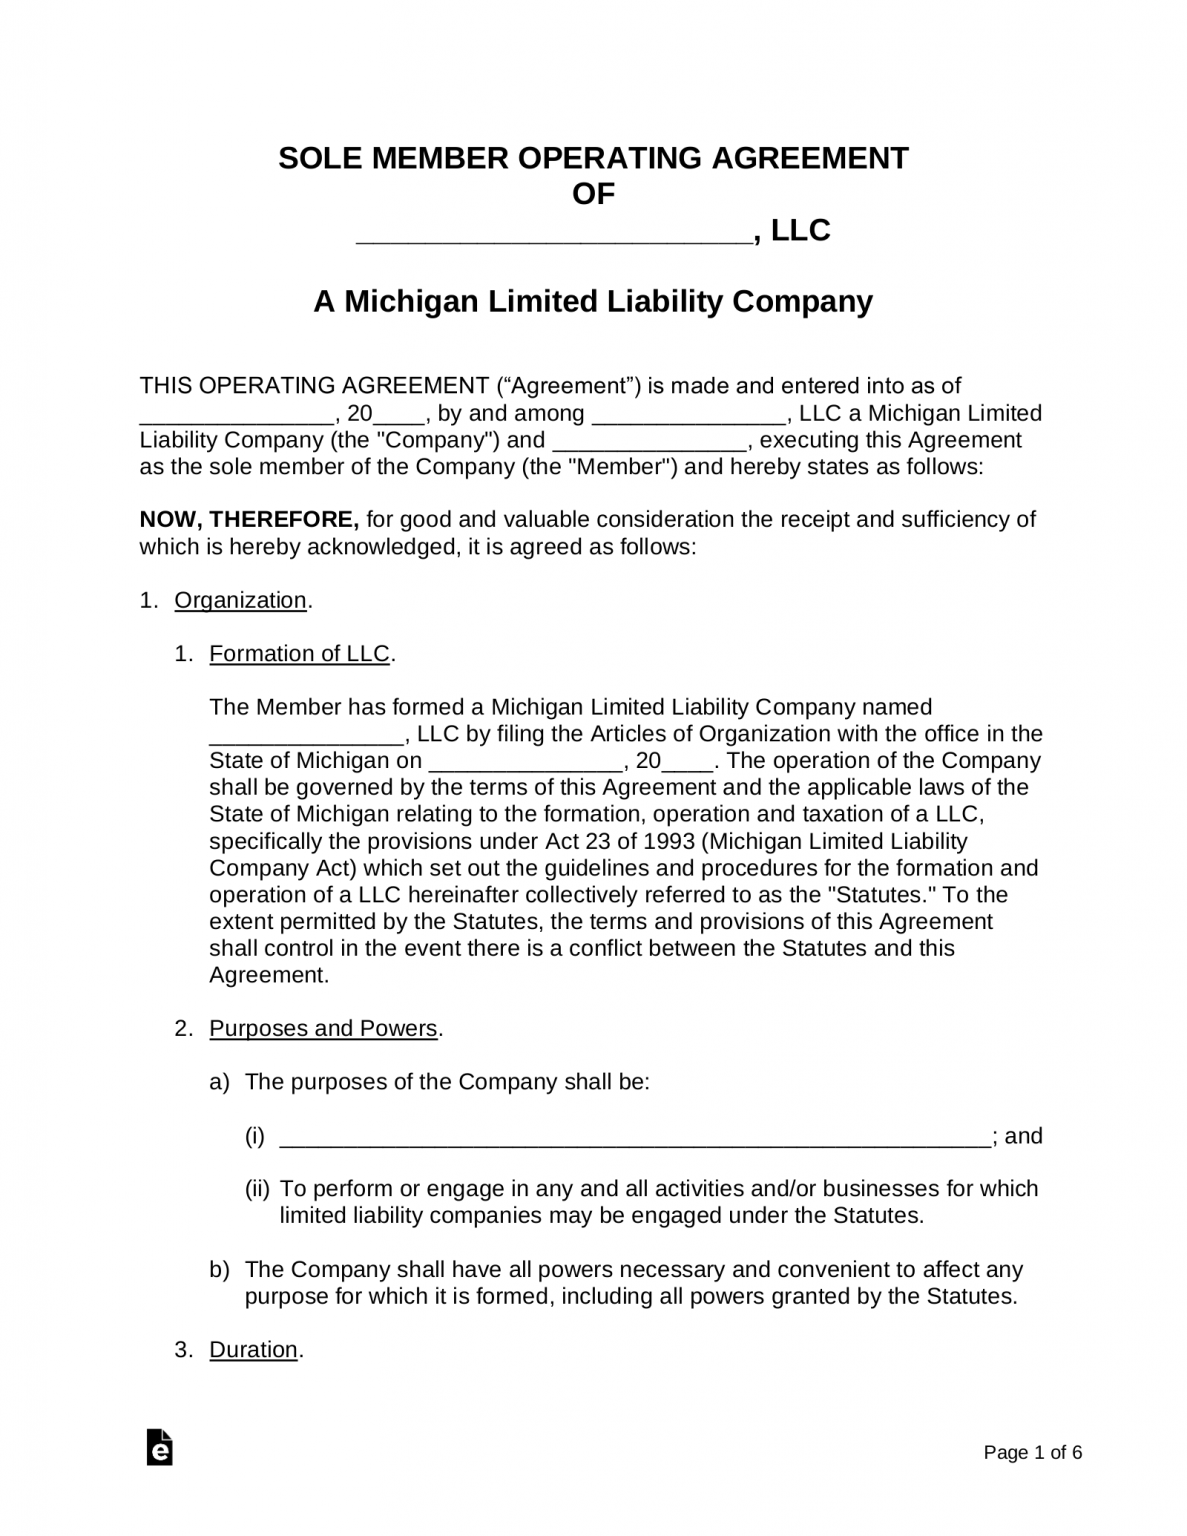 free-michigan-single-member-llc-operating-agreement-form-pdf-word